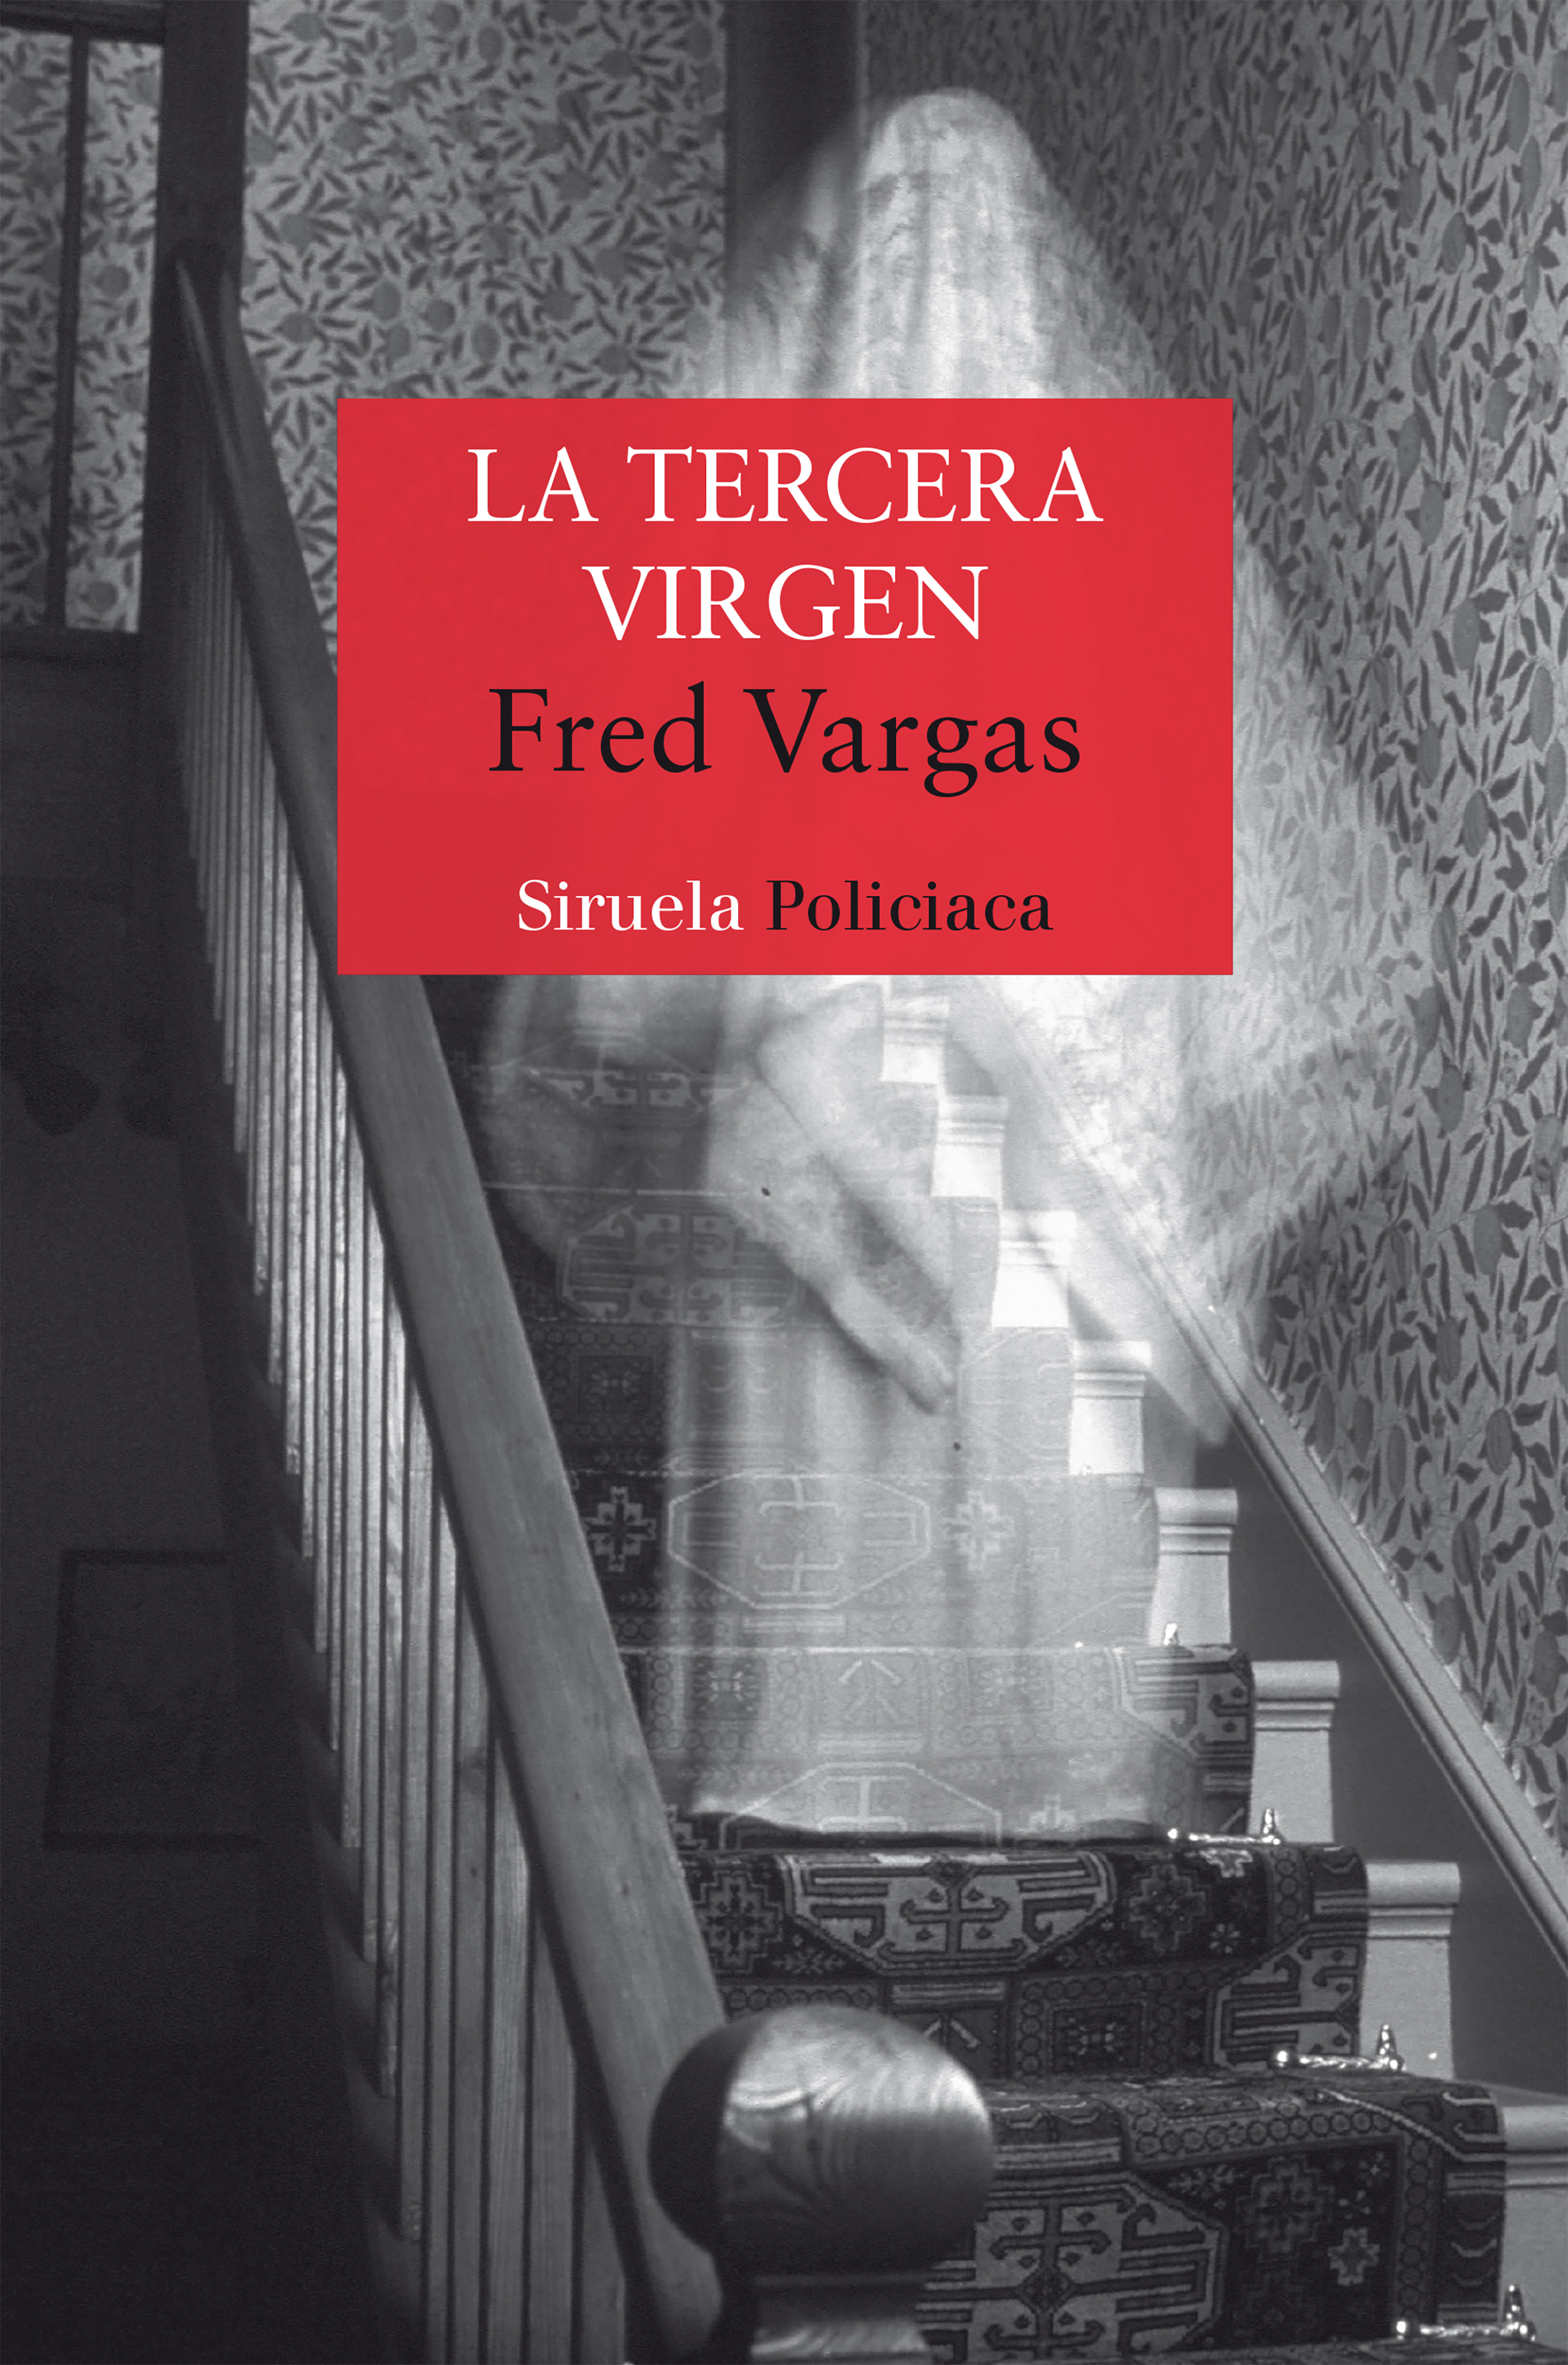 9788498411614 L38 04 x - La tercera virgen (Fred Vargas) - (Audiolibro Voz Humana)